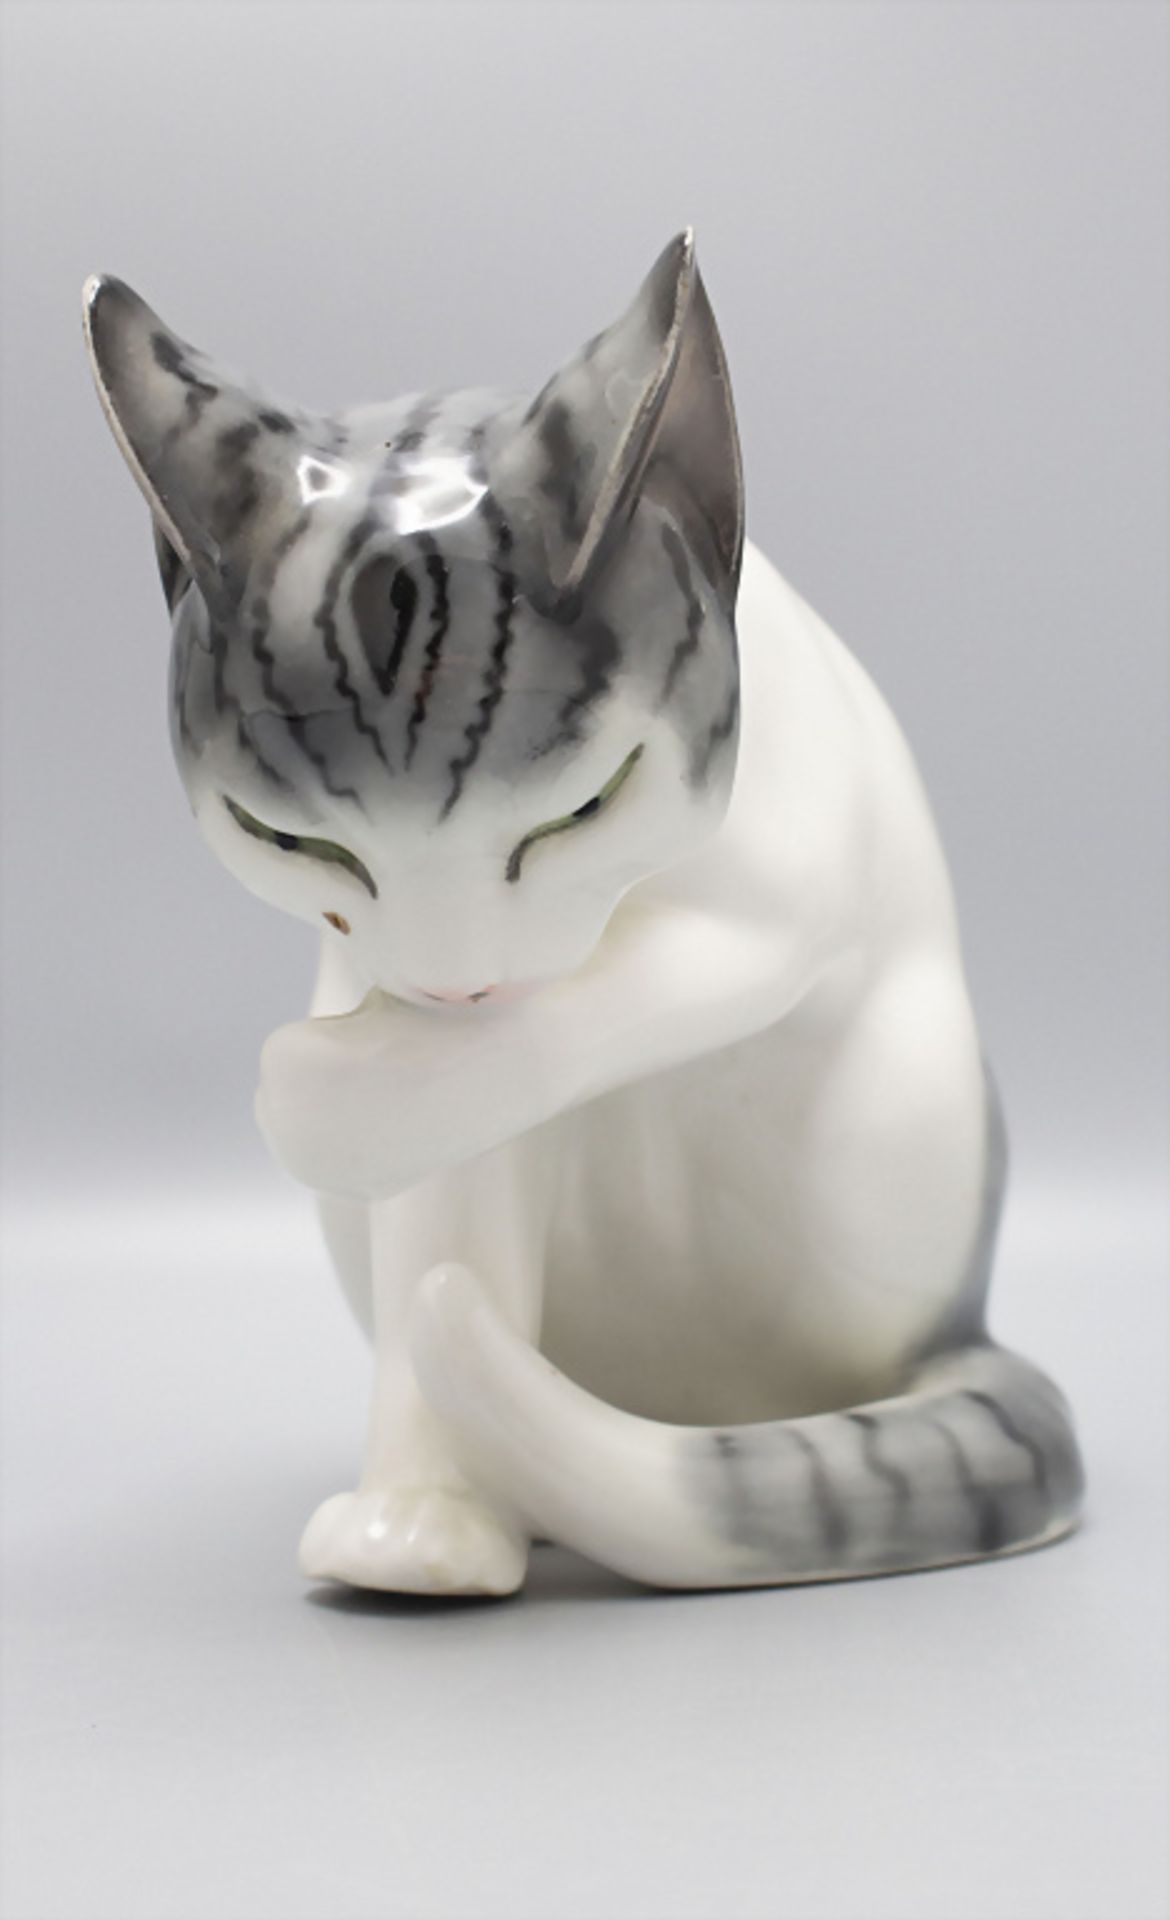 Tierfigur 'Katzenwäsche' / A procelain animal figure 'cat's lick', E. Pfeffer, Gotha, um 1930